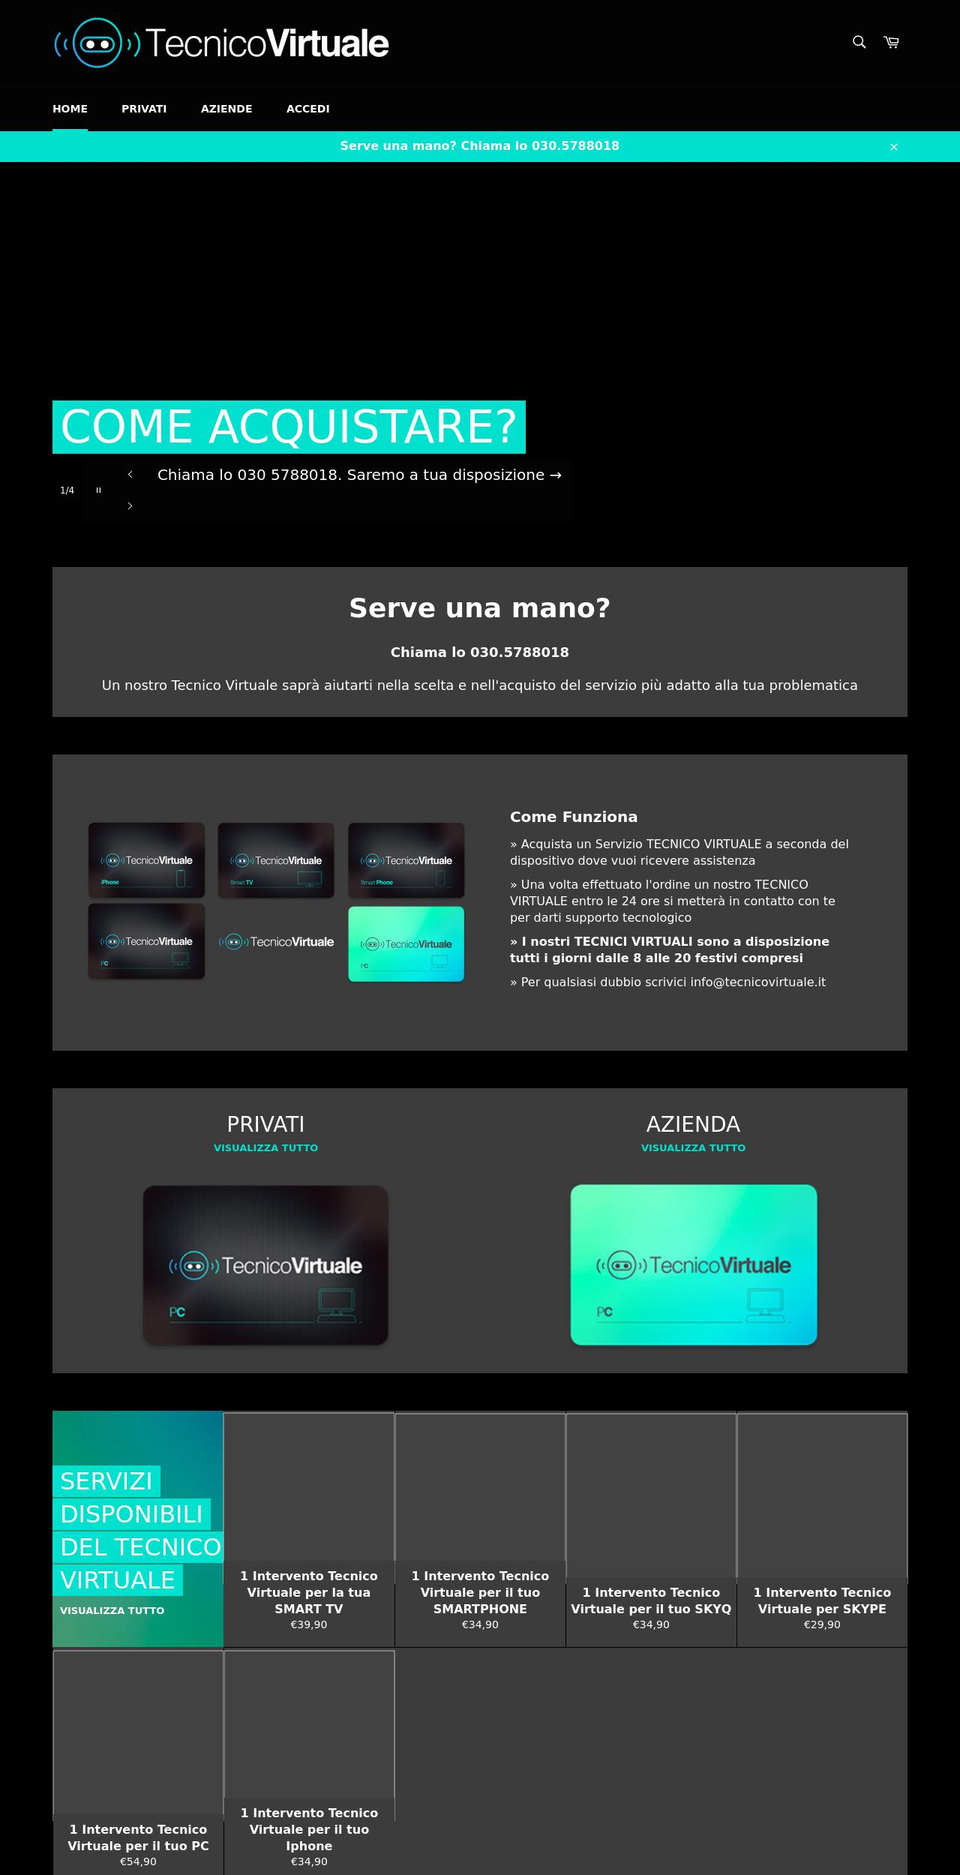 tecnicovirtuale.it shopify website screenshot